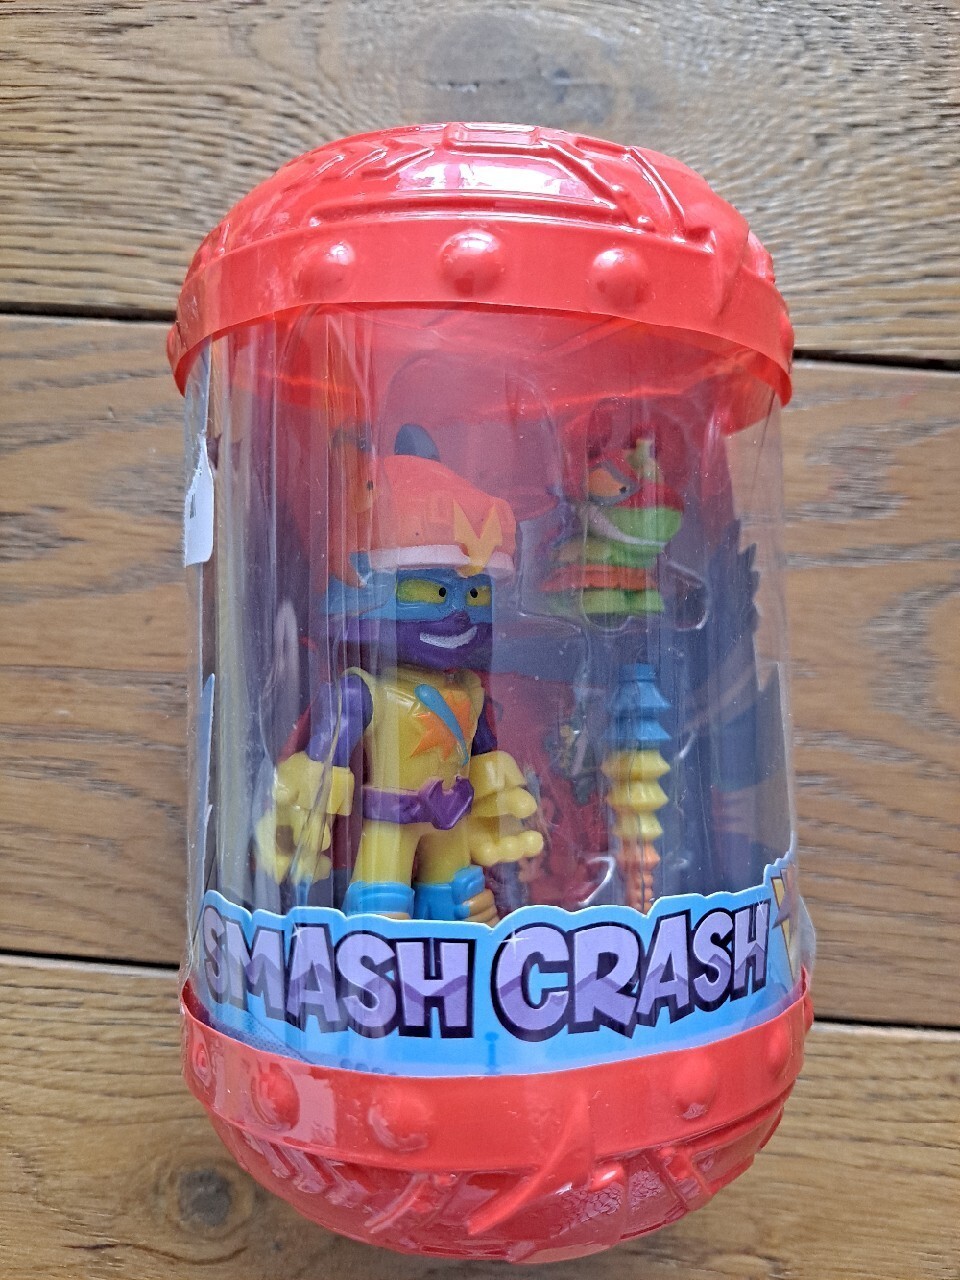 SuperThings - Kazoom Kids - SMASH CRASH